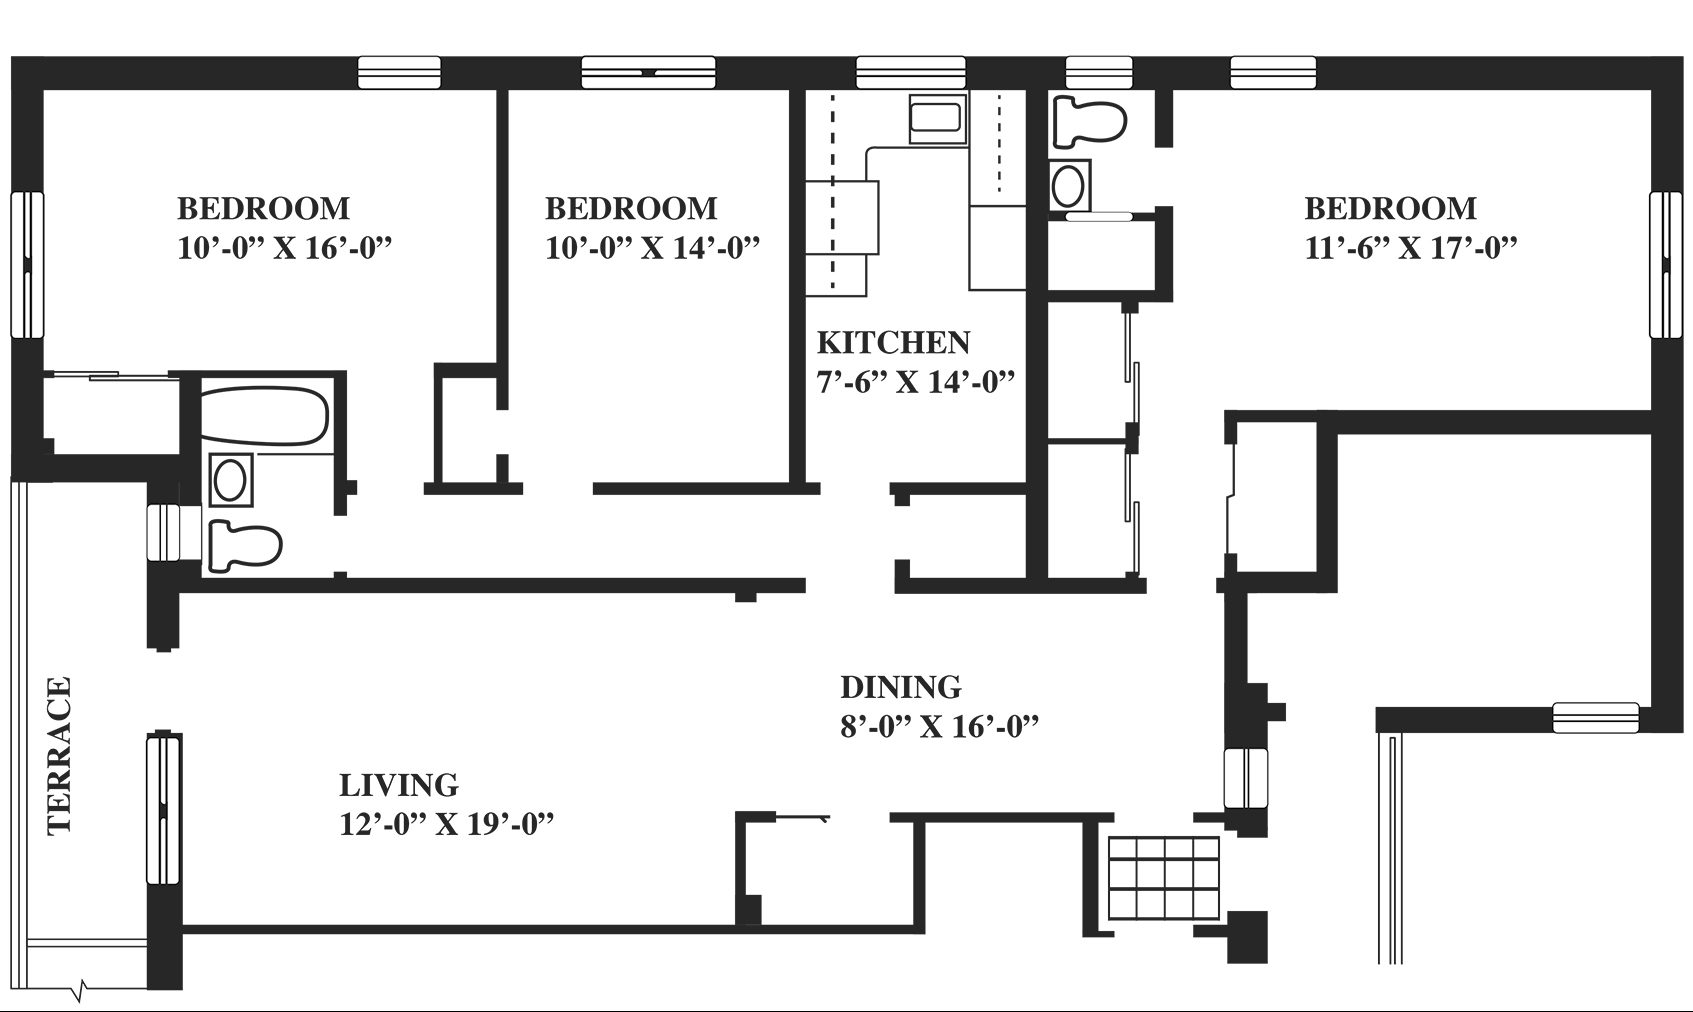 Floor Plans - 3 Bedrooms - Greenwich Close Apartments